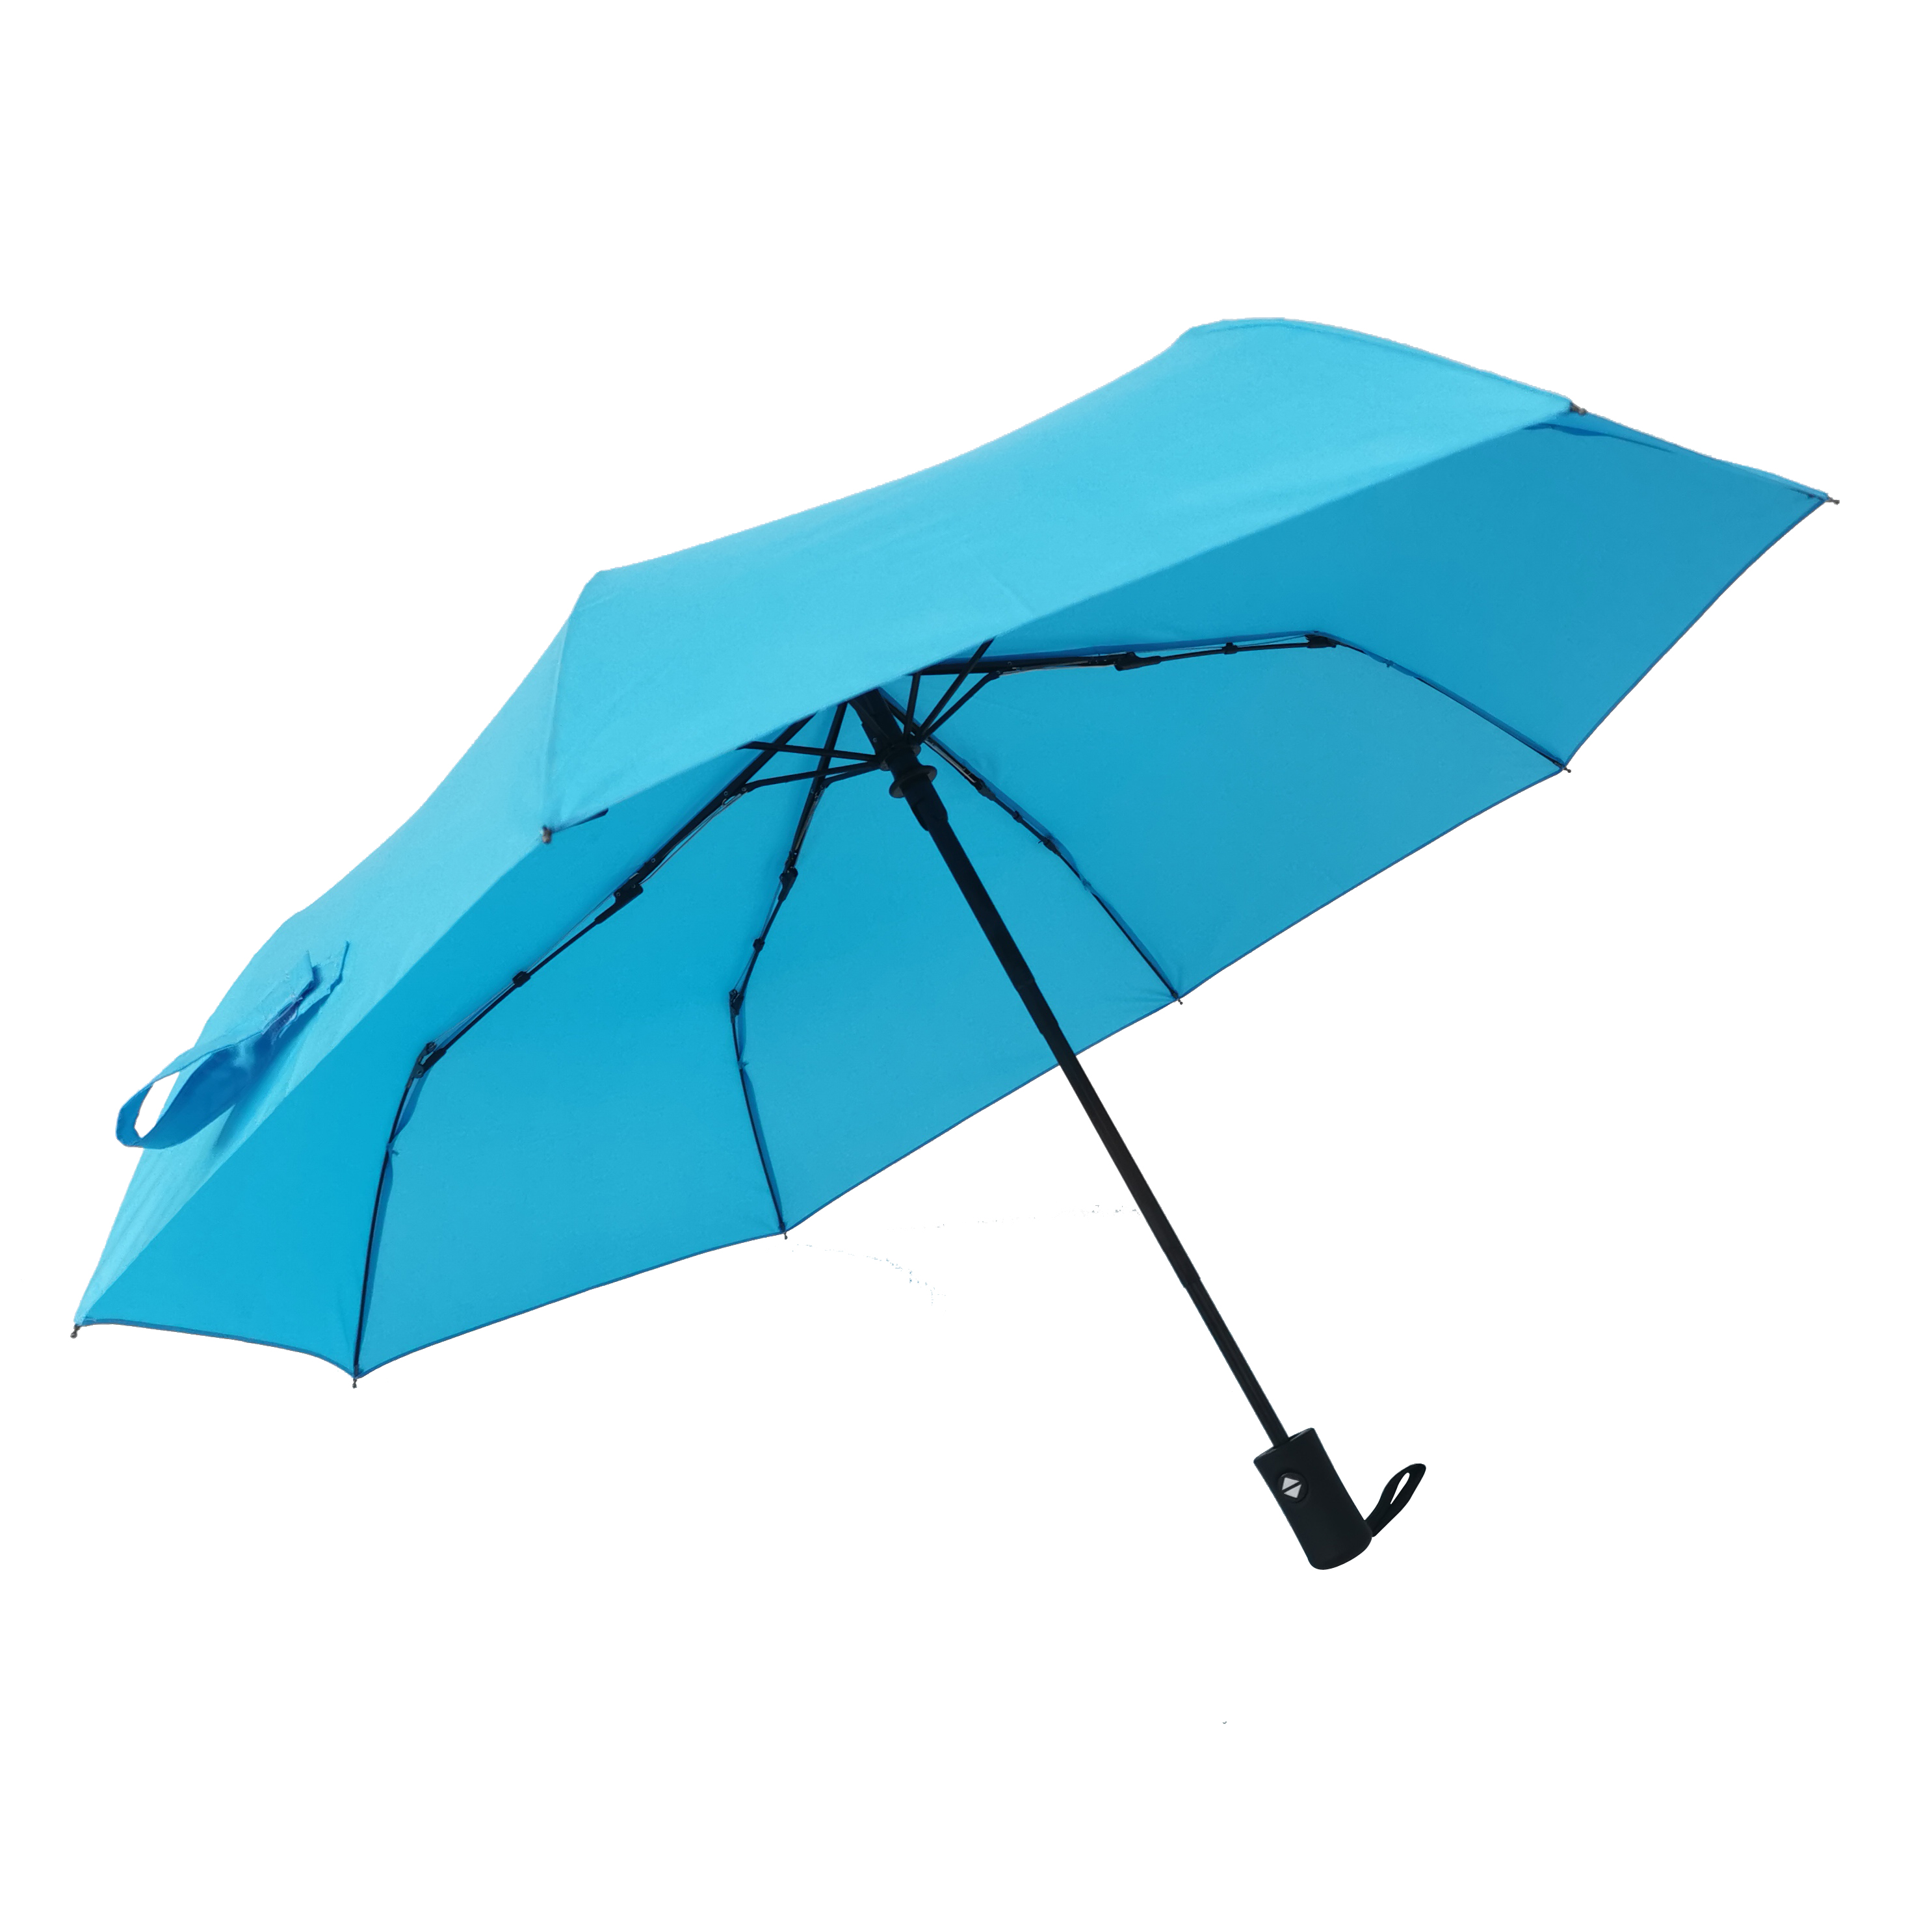 https://www.hodaumbrella.com/21-customization-fully-automatic-3-folding-sunrain-ubrella-for-adult-polyester-pongee-plastic-handle-6k-8k-product/